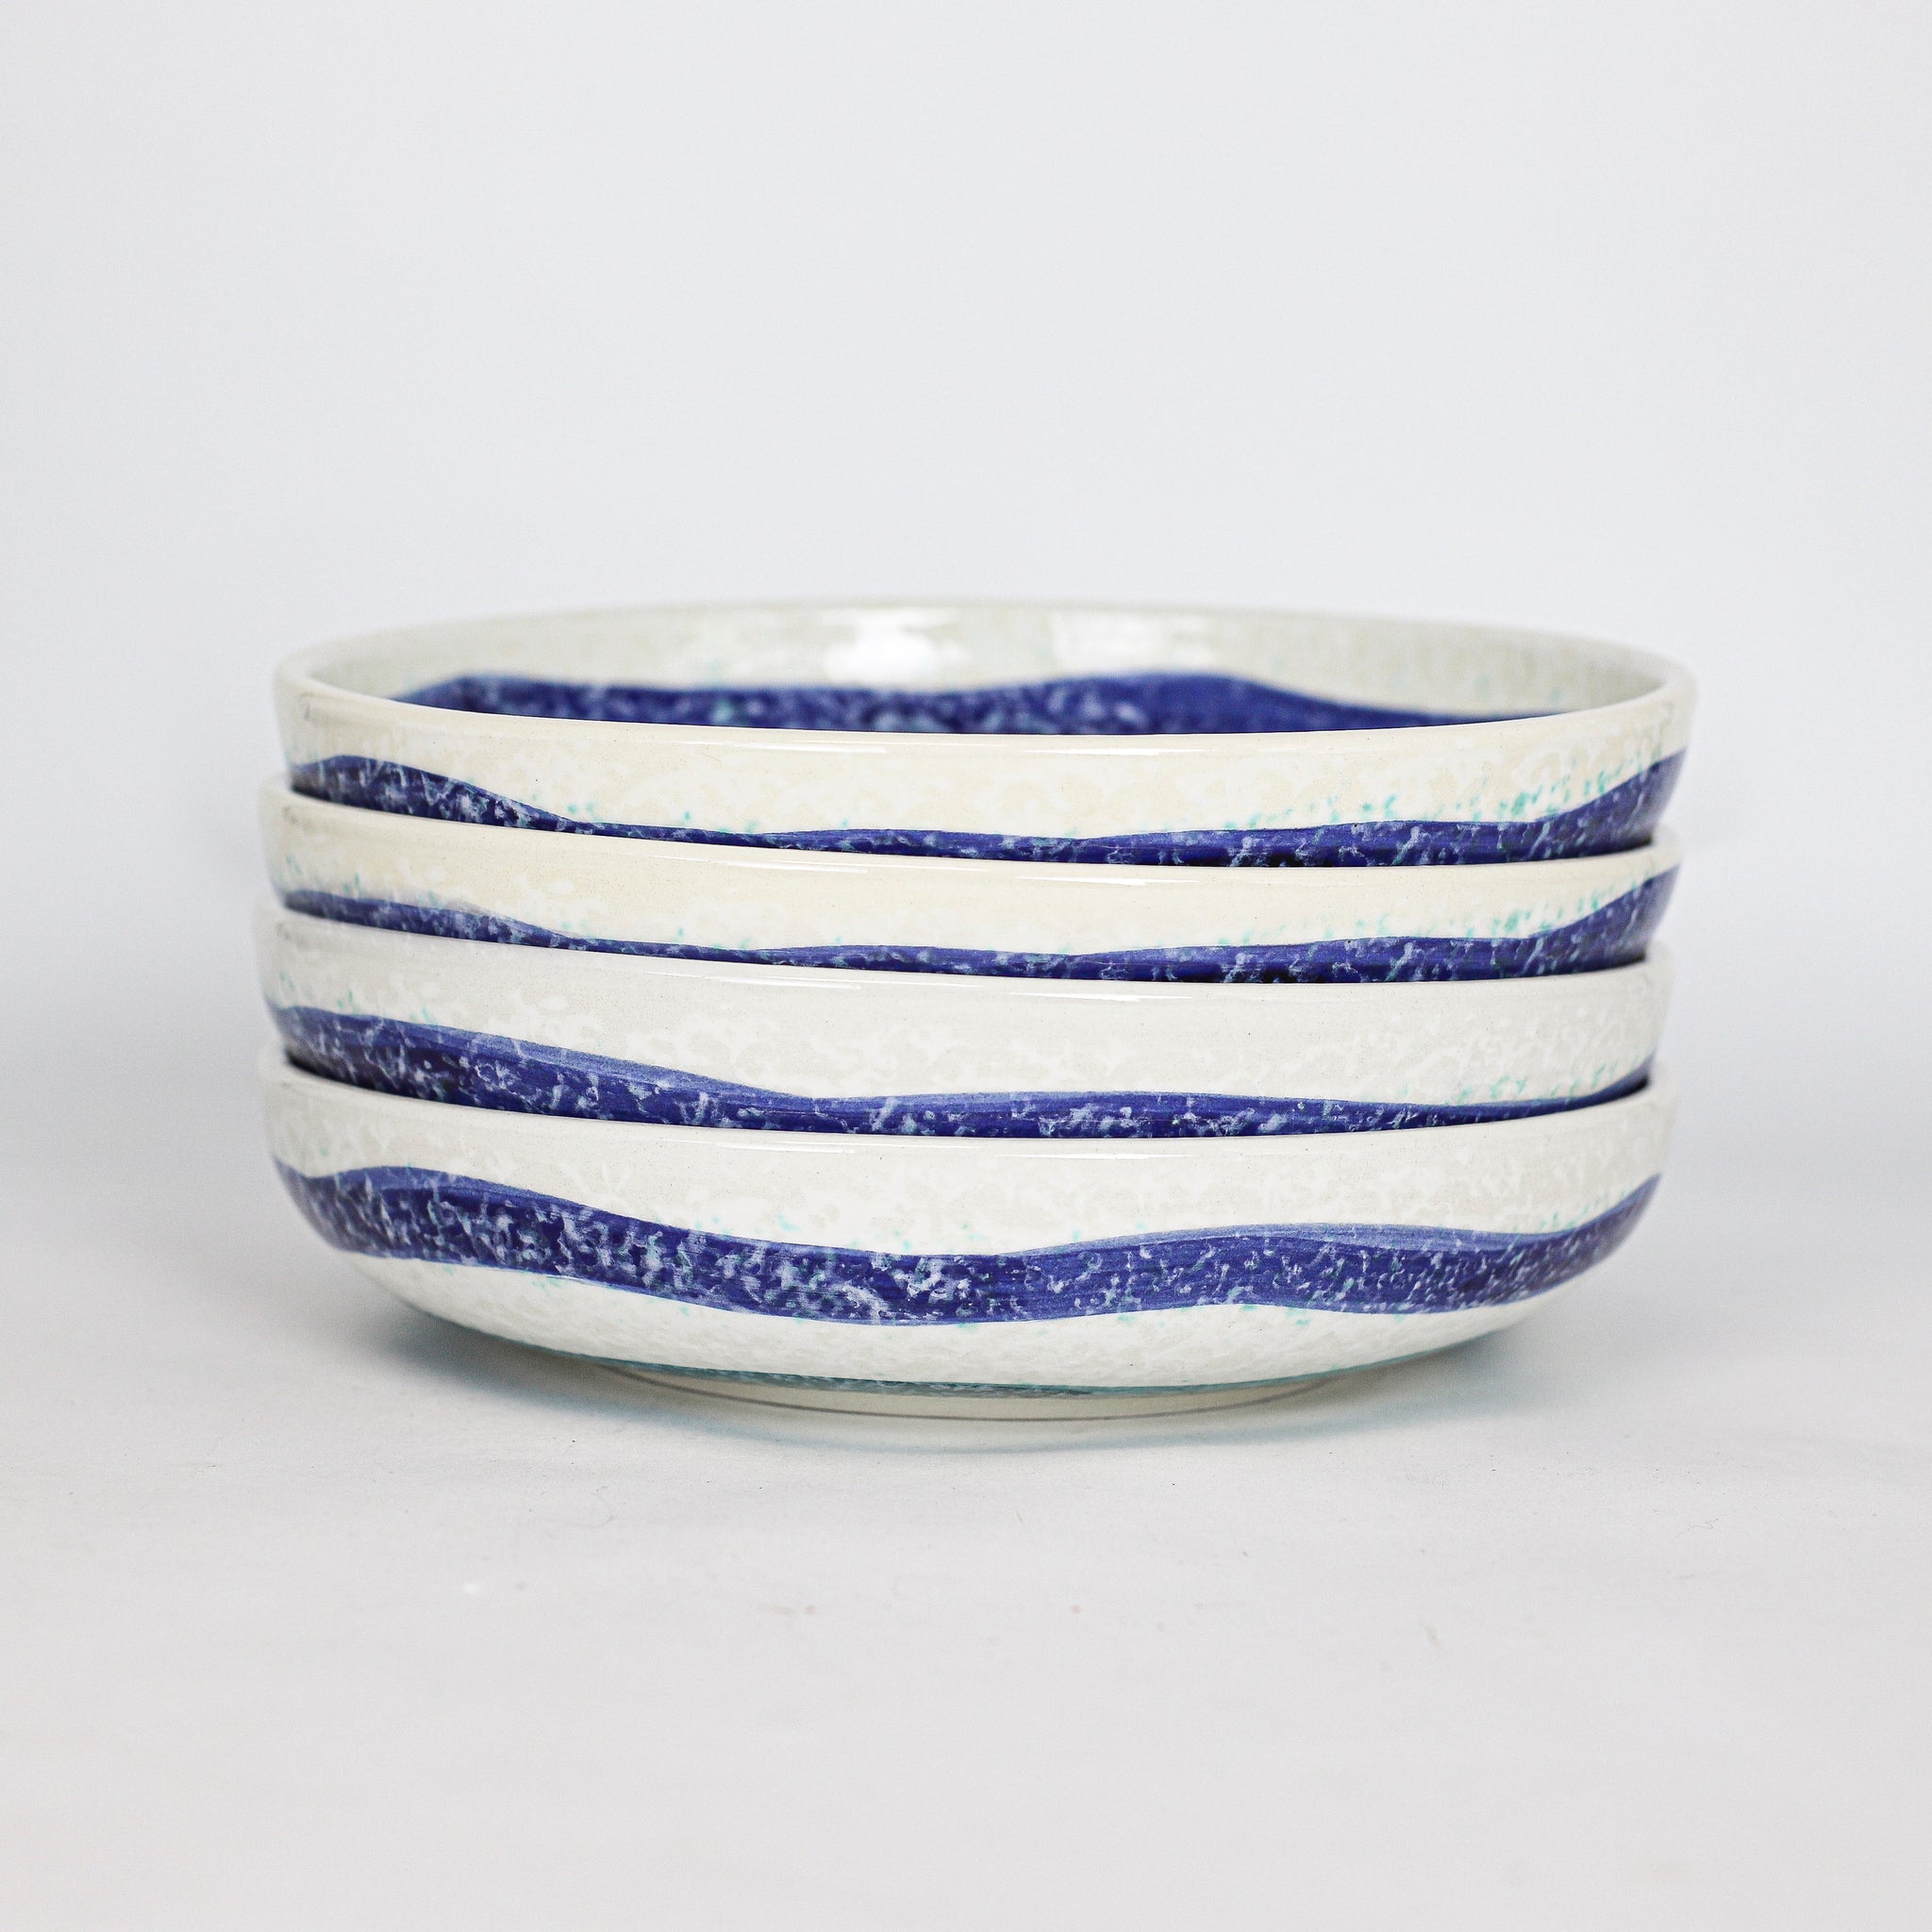 Menorca 4 Piece Meal Bowl Set - Blue and Turquoise Stripe - Euro Ceramica 